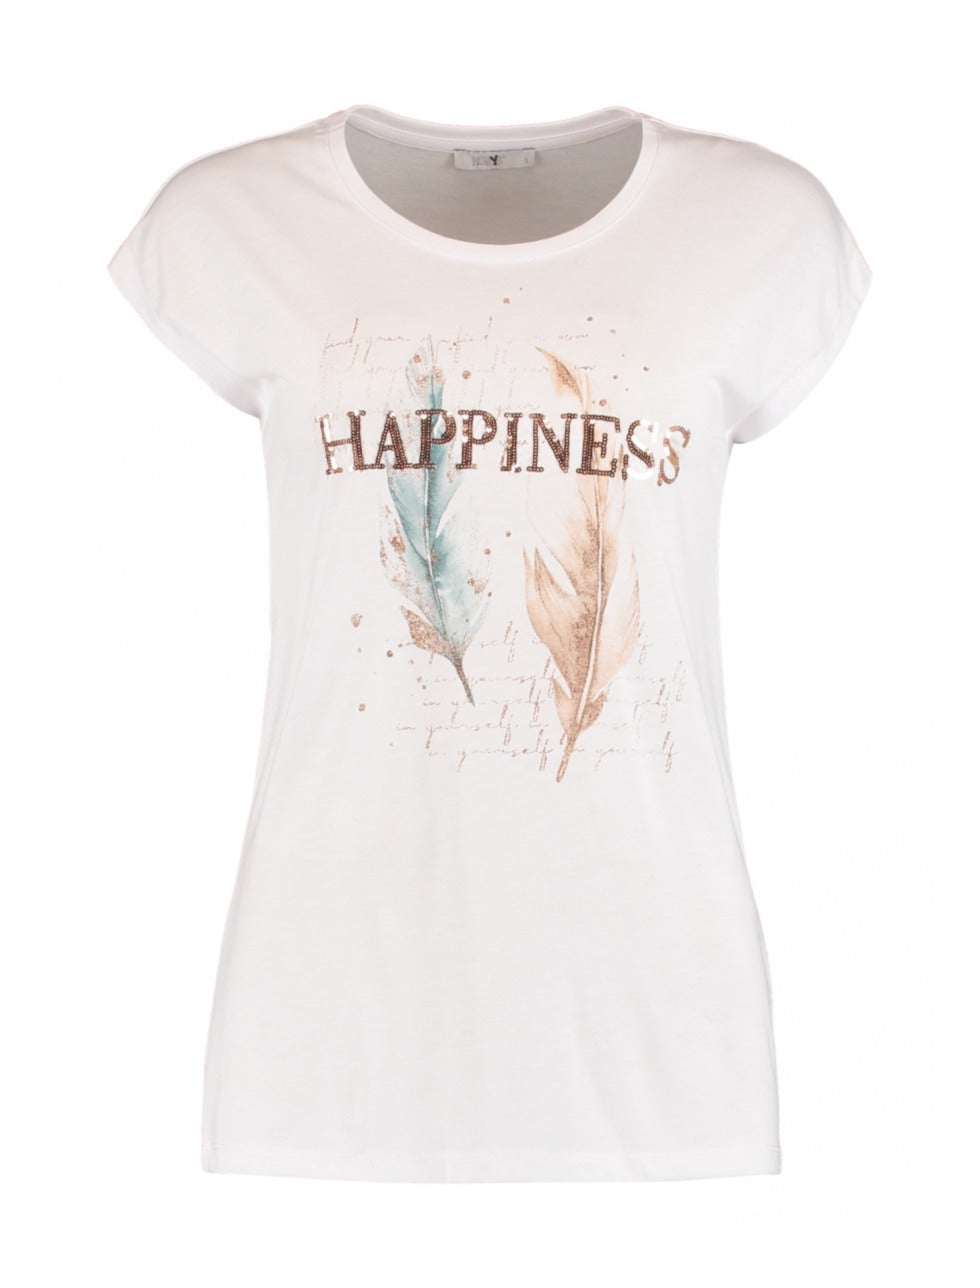 Kalia White Happiness T-Shirt